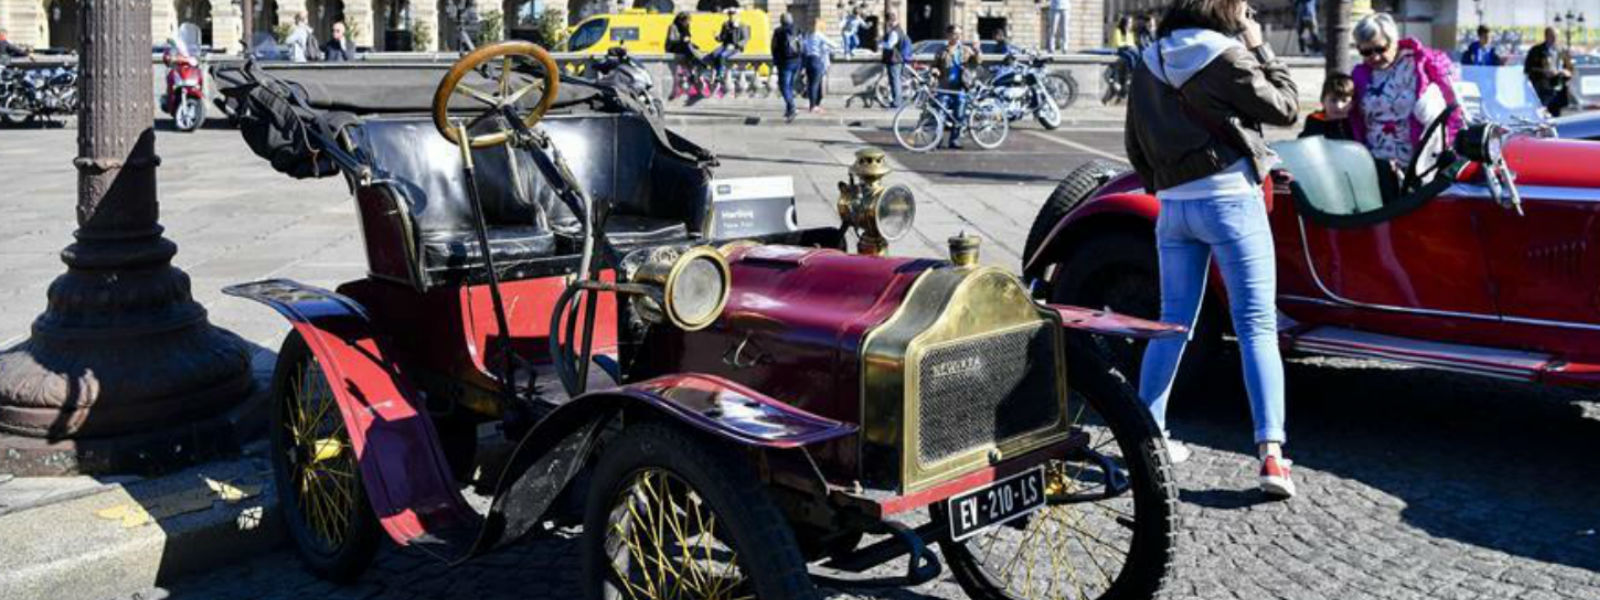 Paris celebrates autoshow's 120th anniversary